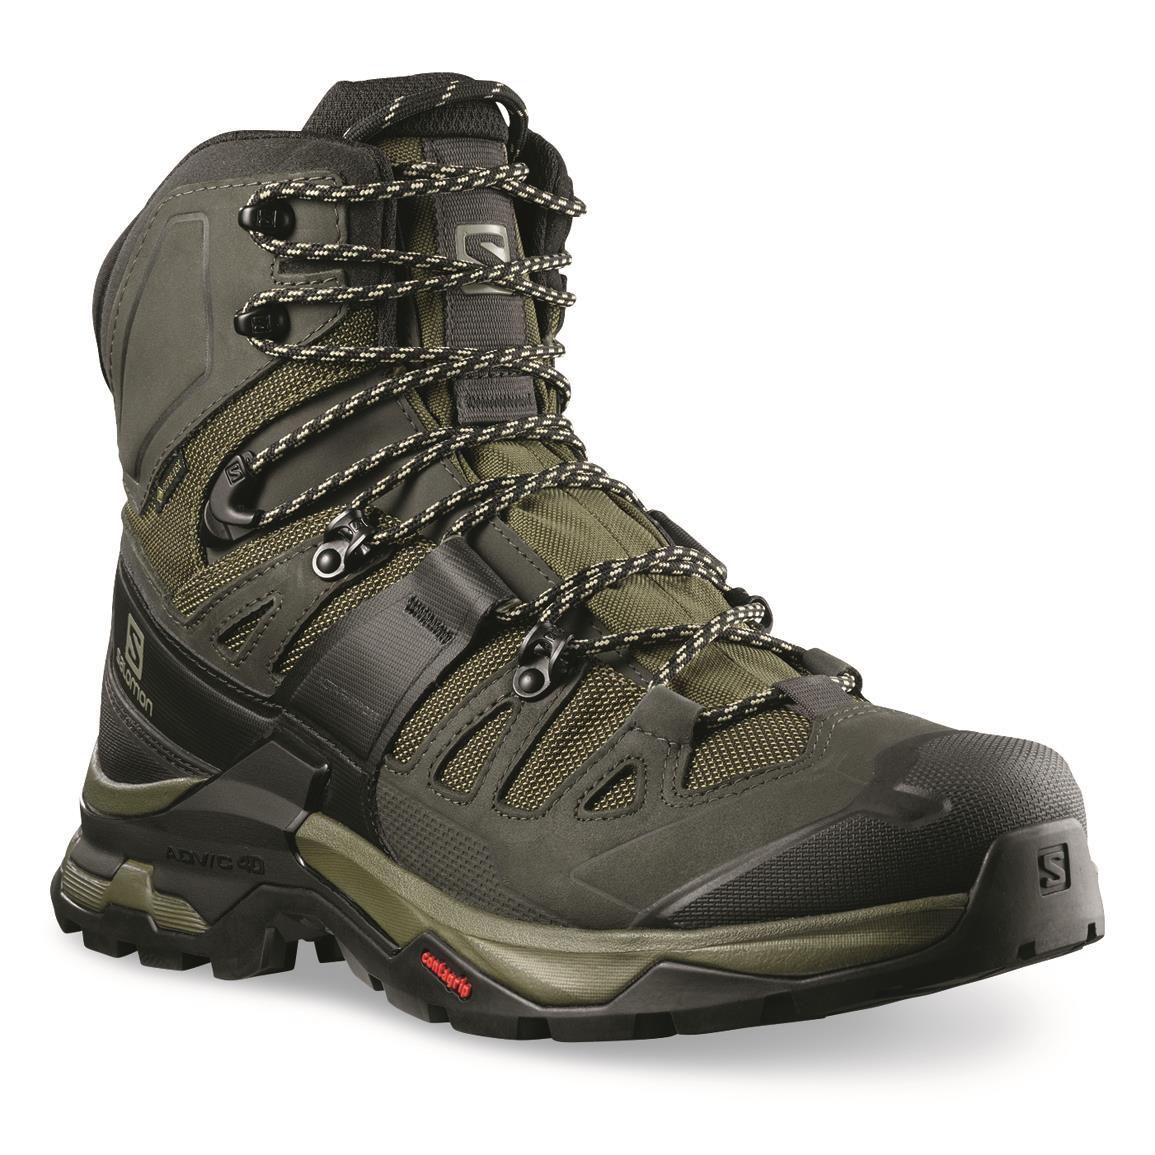 Salomon Men's Quest 4 GTX Waterproof Hiking Boots, GORE-TEX, Olive Night/peat/safary